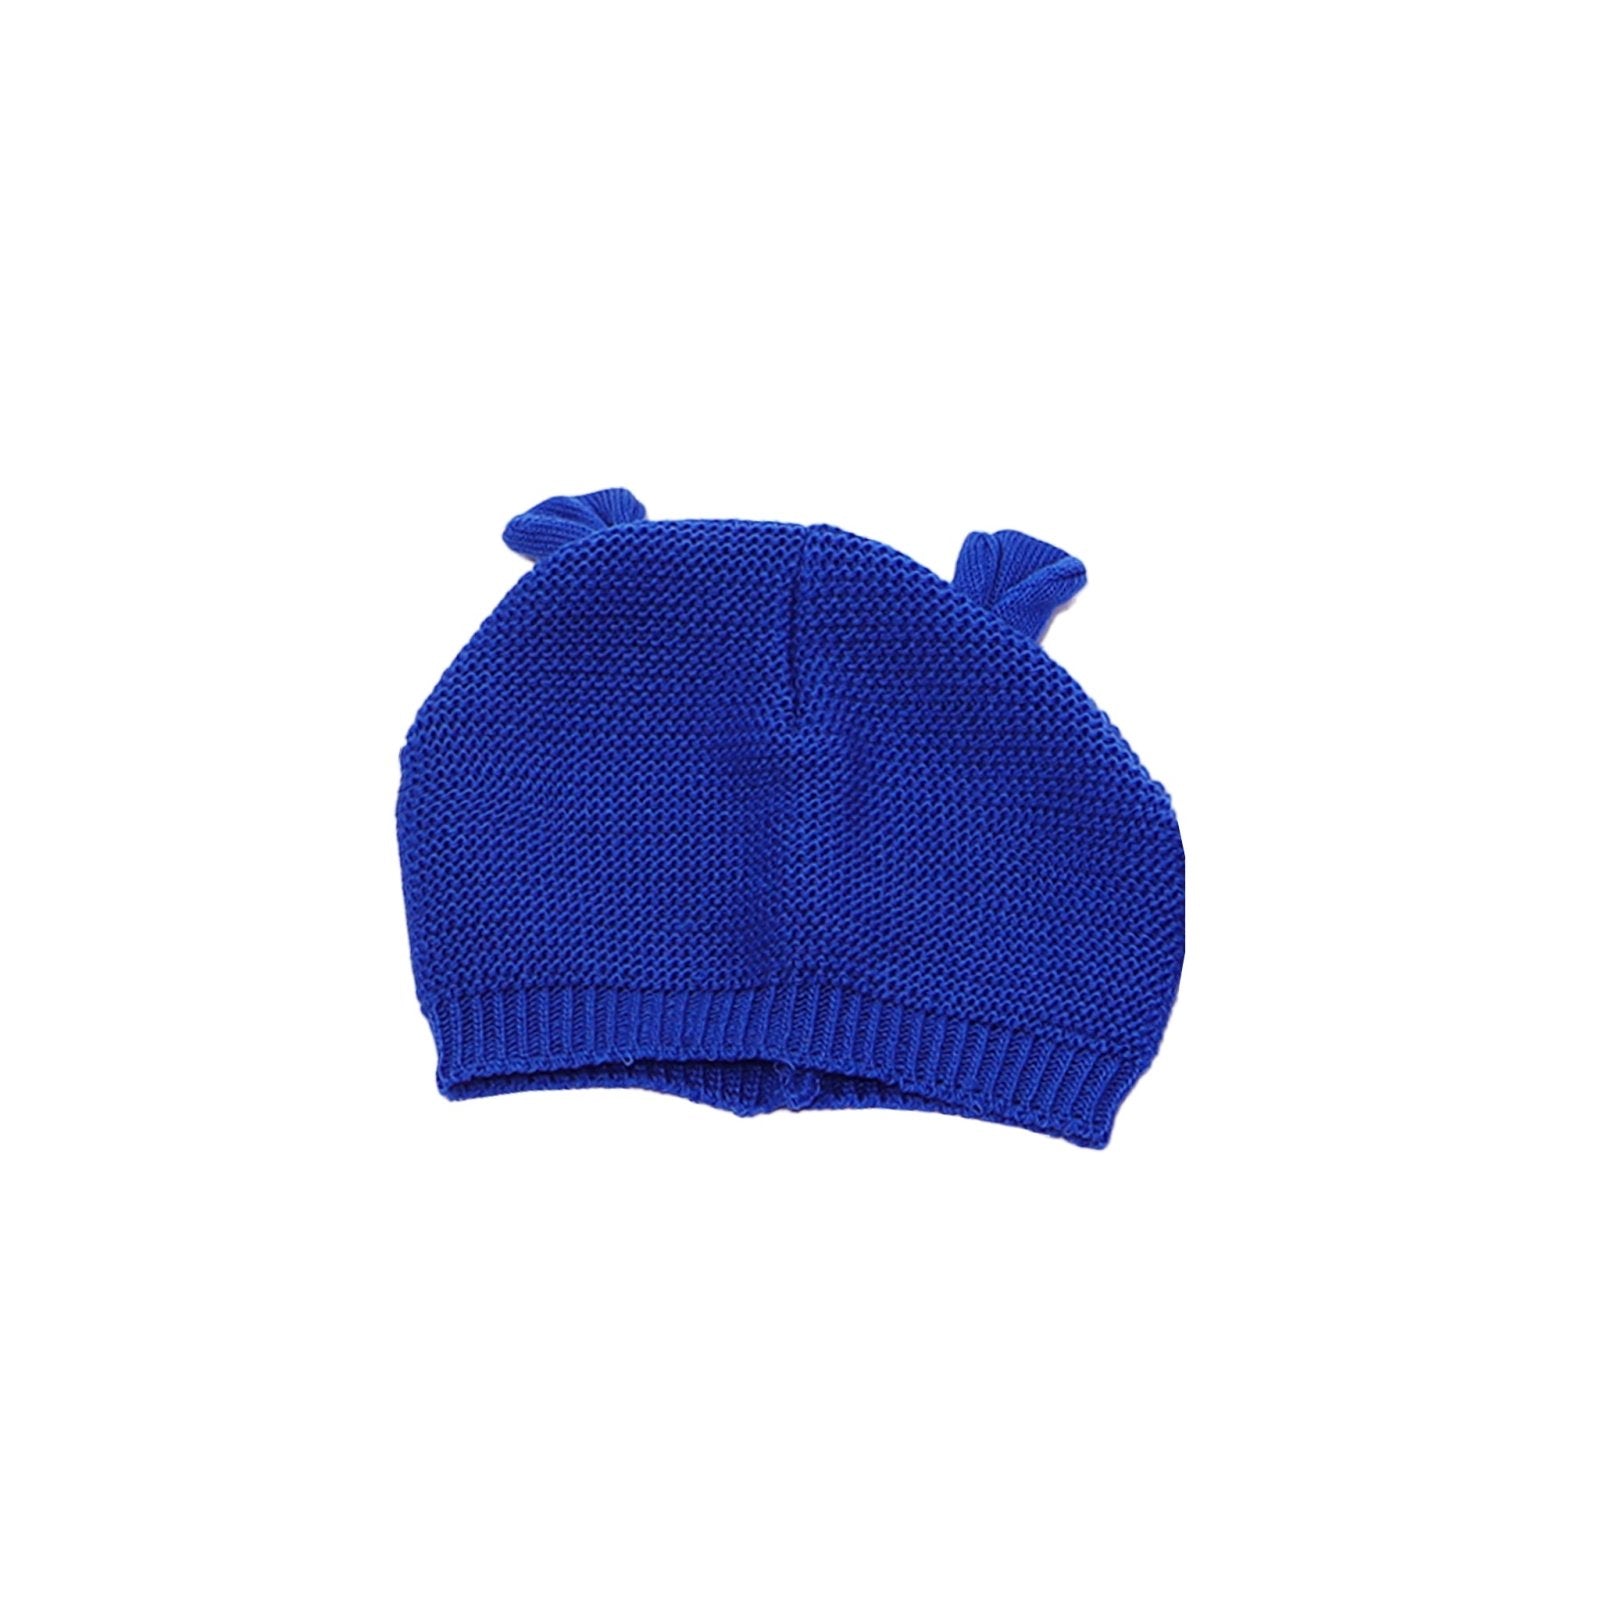 4 Pcs Woolen Gift Set Knitting Royal Blue Color by Little Darling